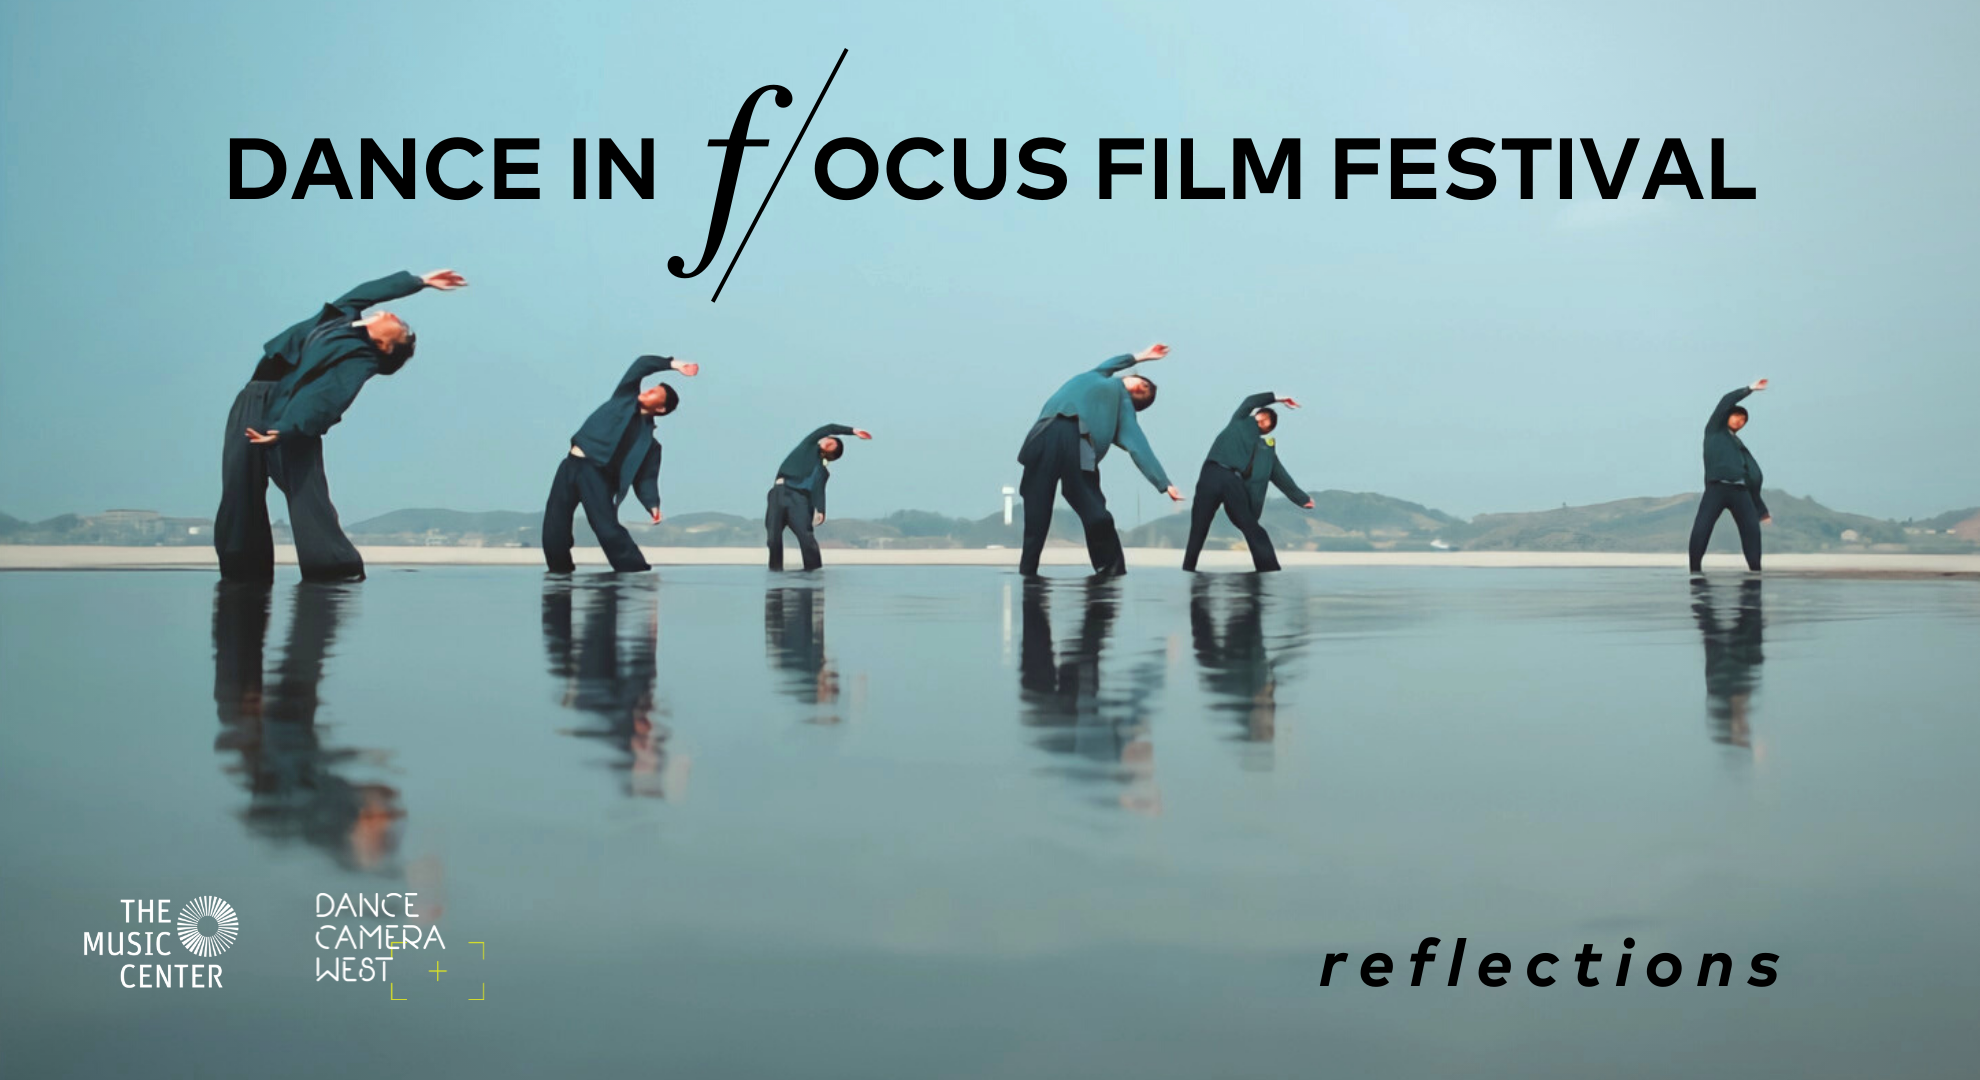 Dance in Focus Film Festival: Reflections